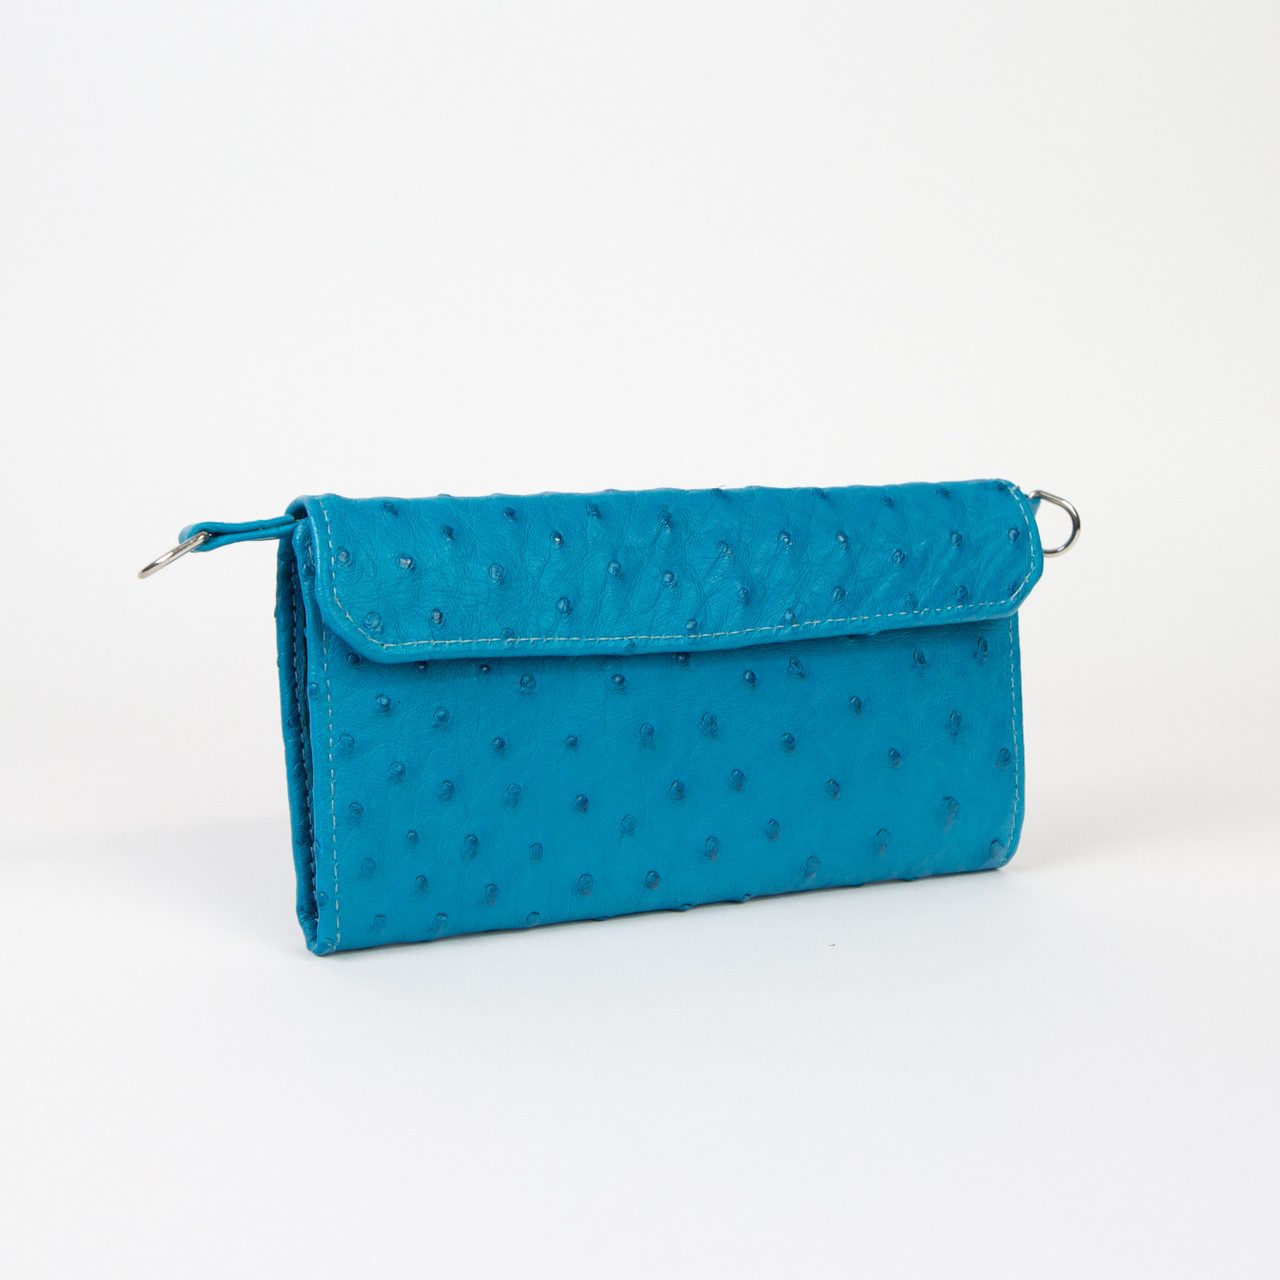 MONARCH Ostrich Leather Handbag, Blue, Size 21 